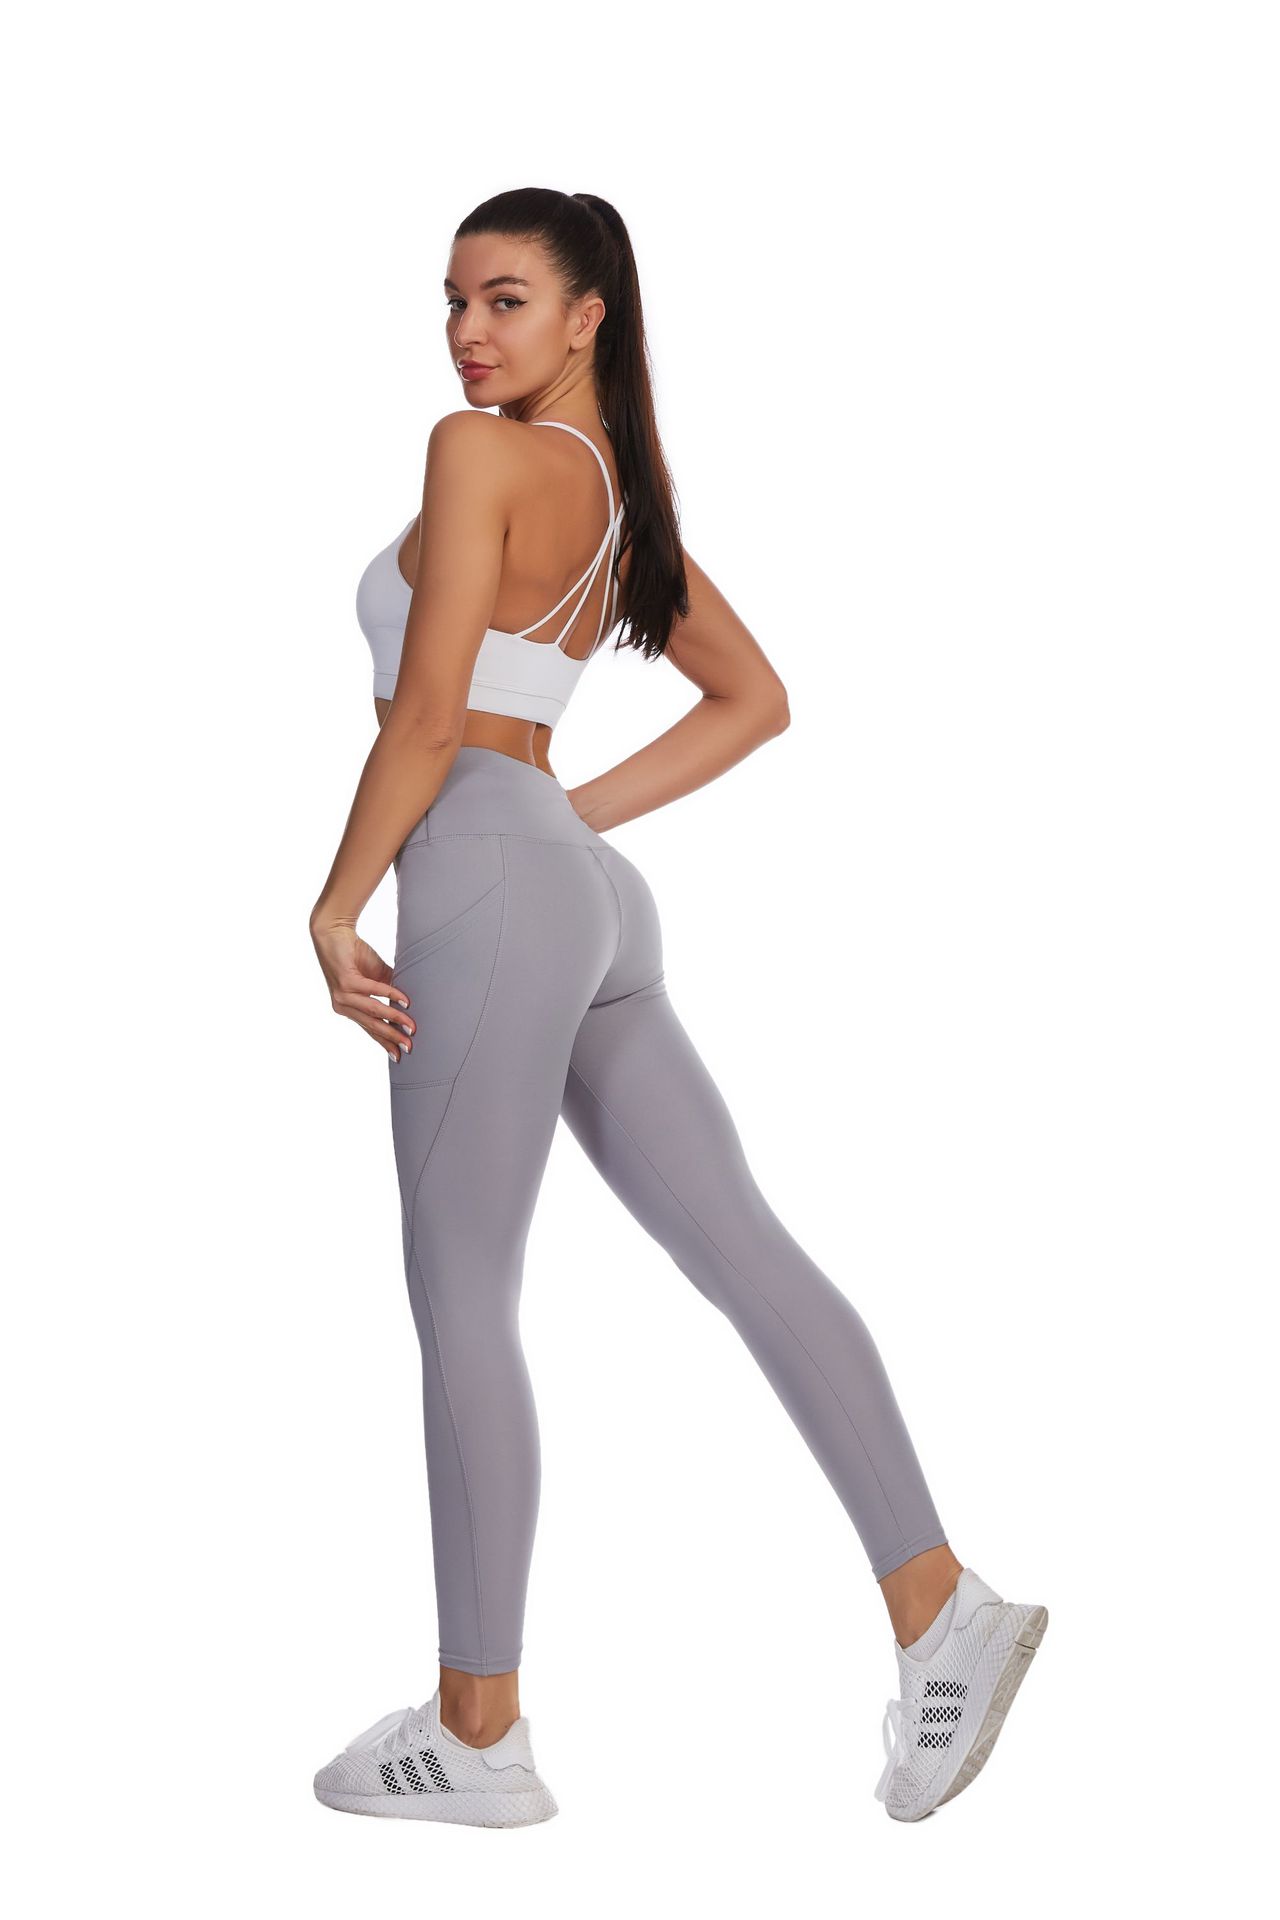 Champion Girls High Waist Activewear Yoga Pants Pockets Gray Size XS #12812